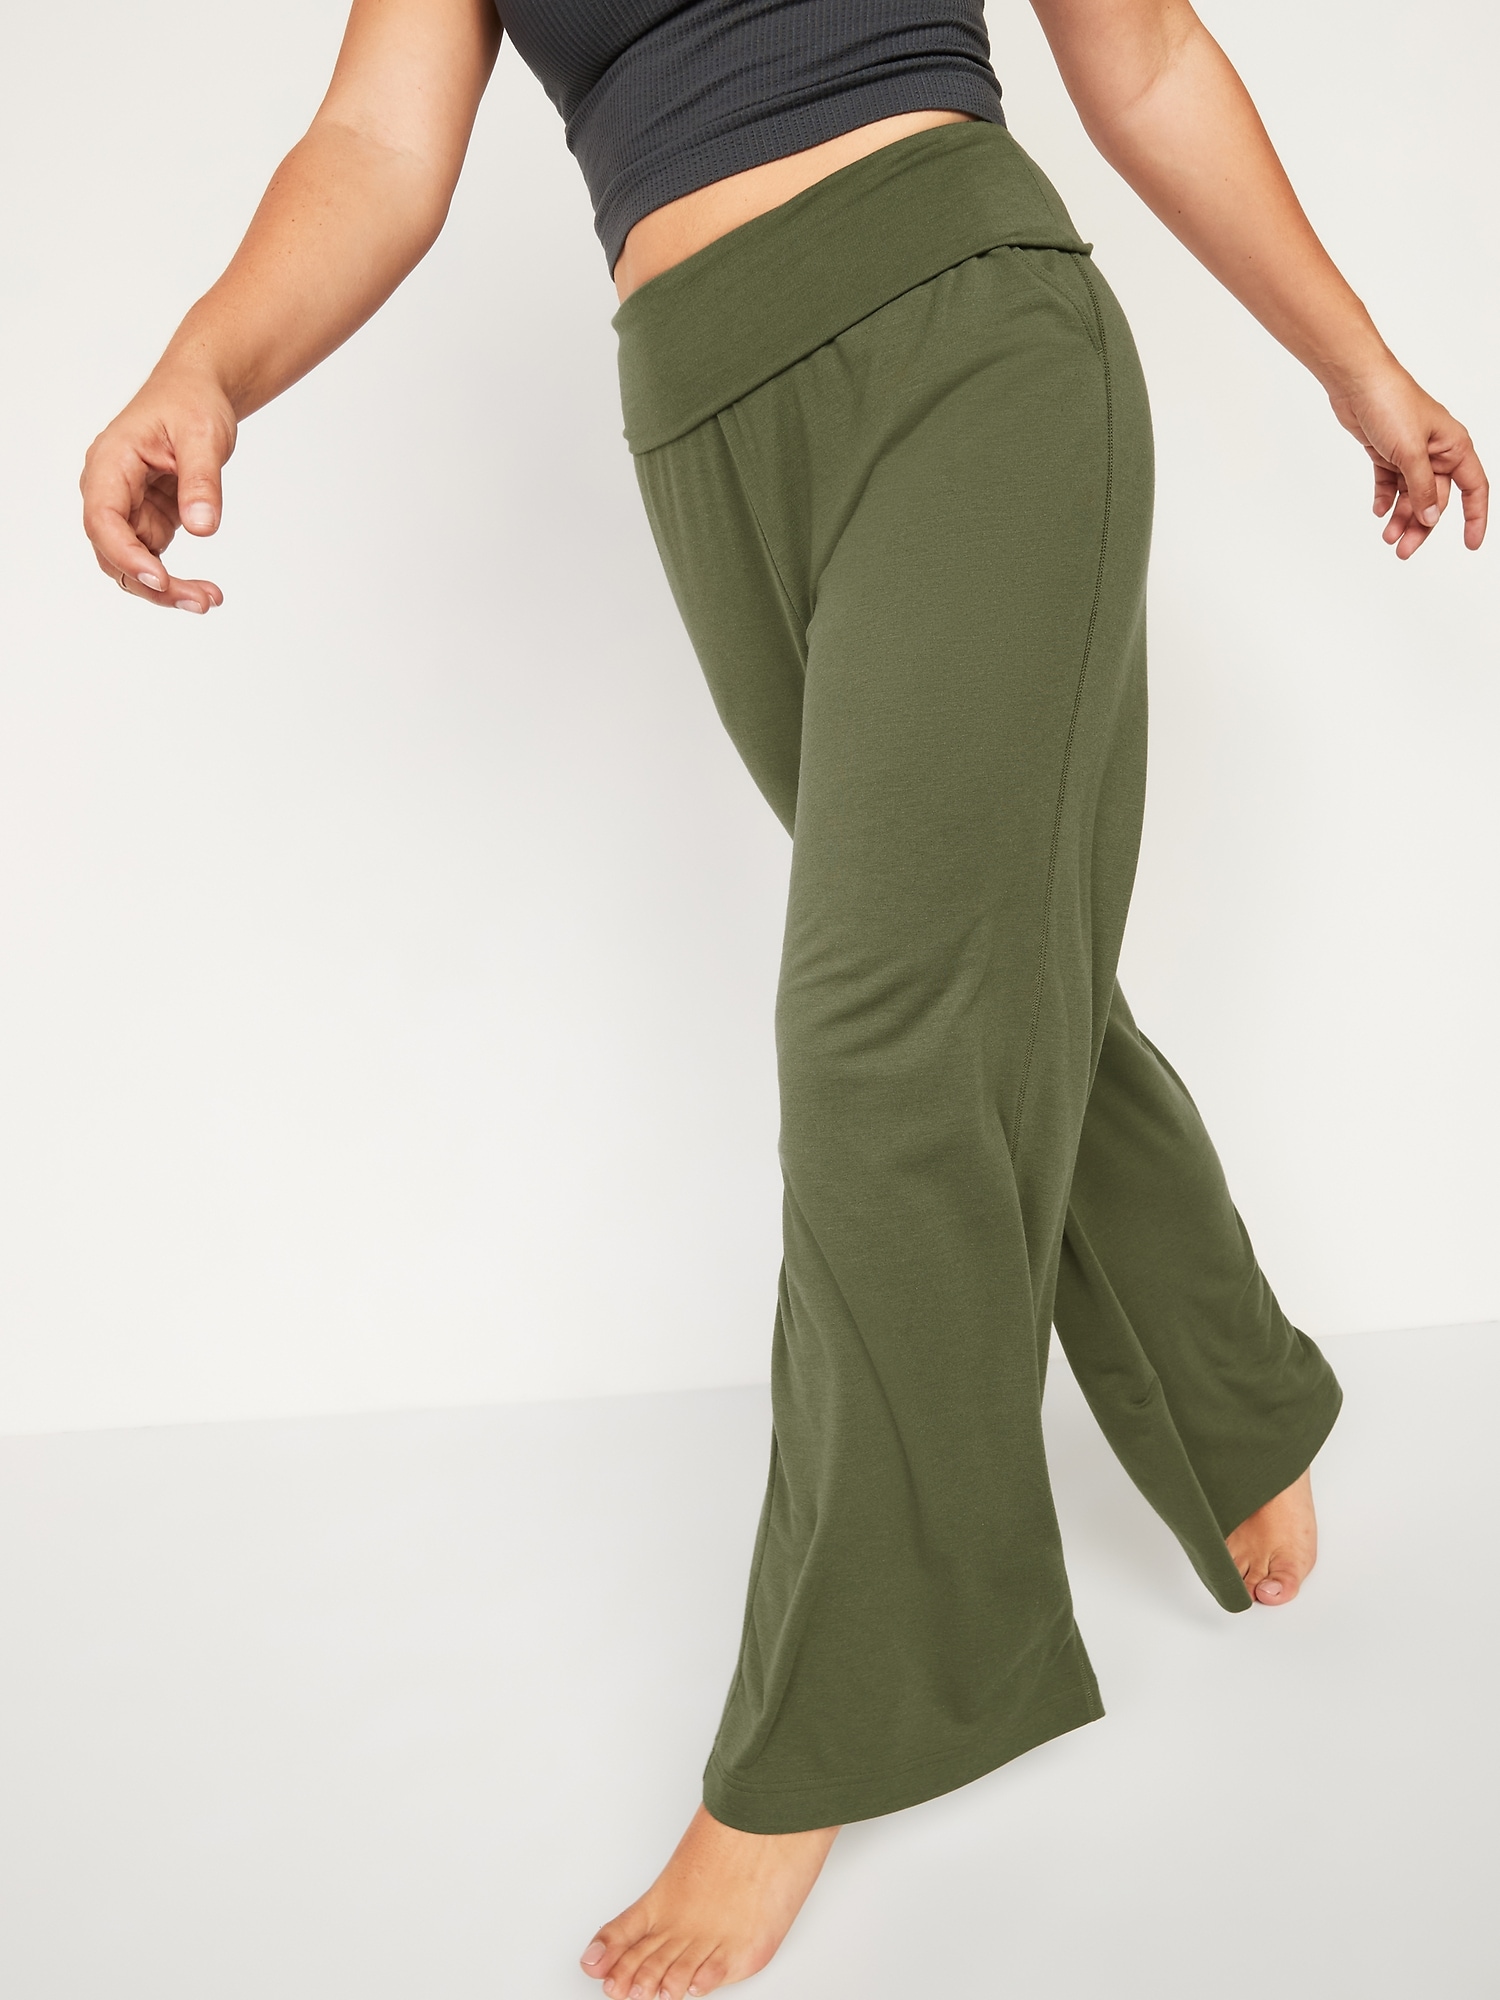 Stretch is Comfort Women's Foldover Plus Size Yoga Pants